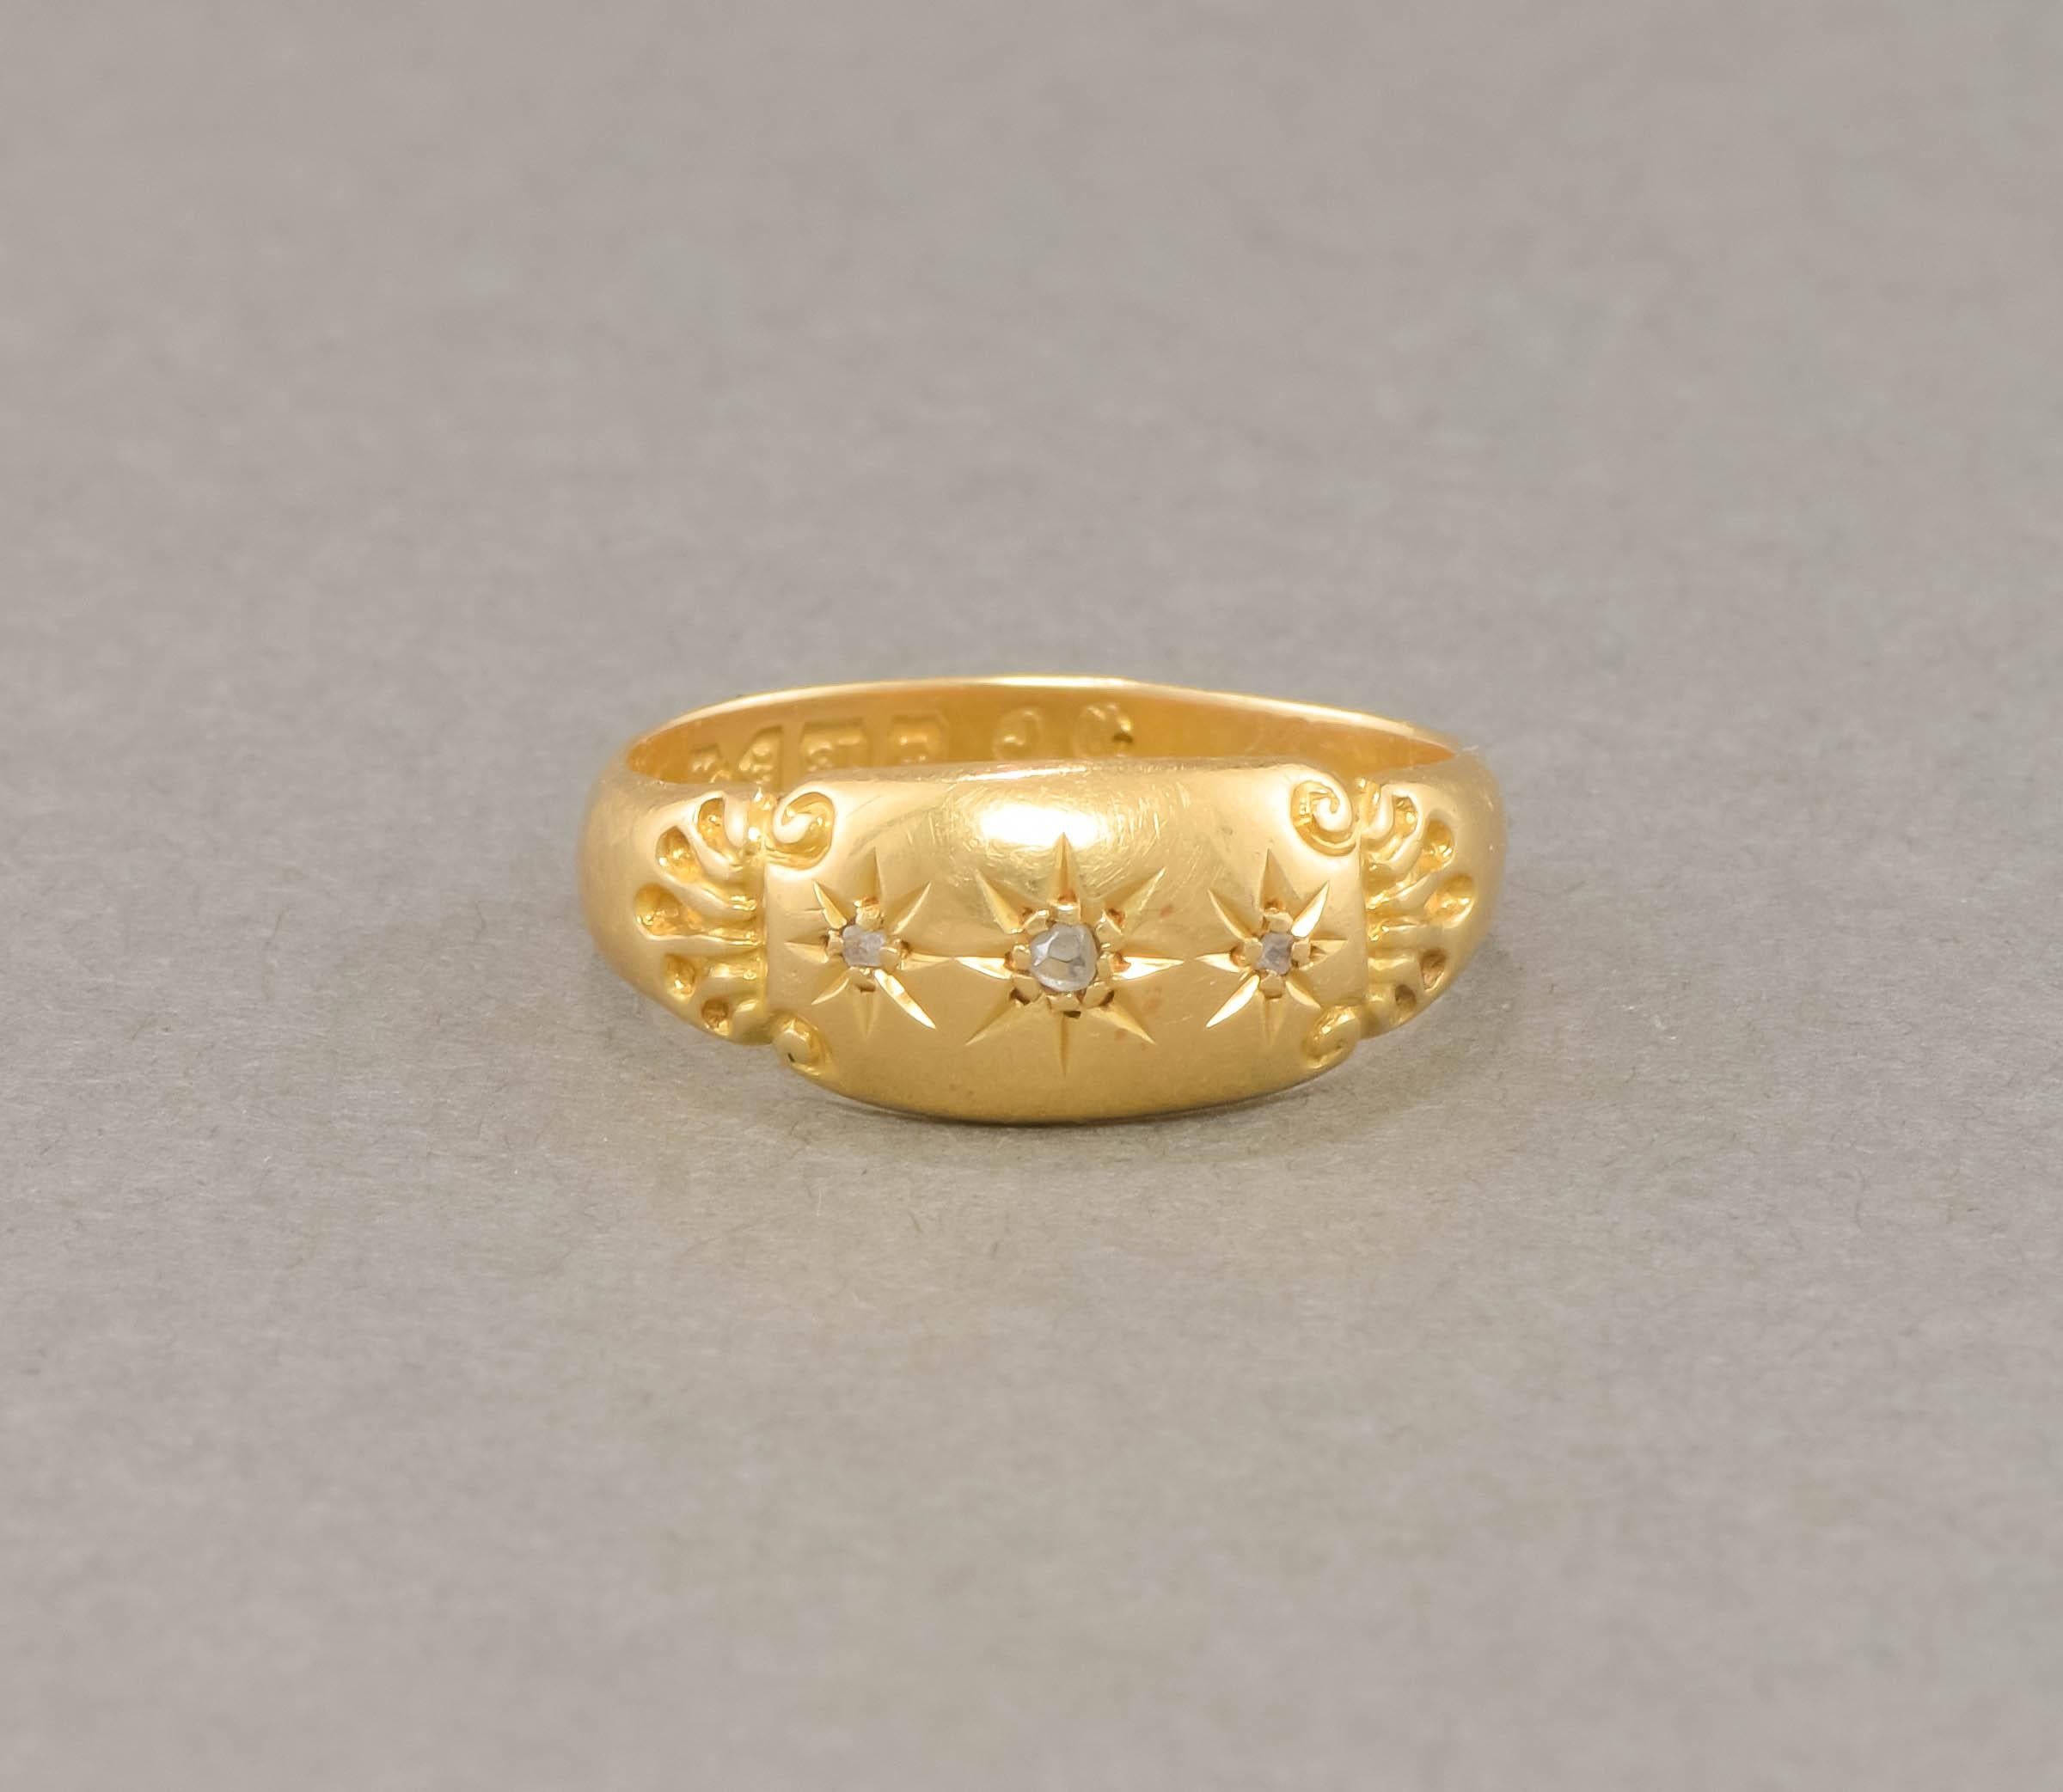 Edwardian 18K Gold Diamond Band Ring, Hallmarked Chester 1910 - 1911 1